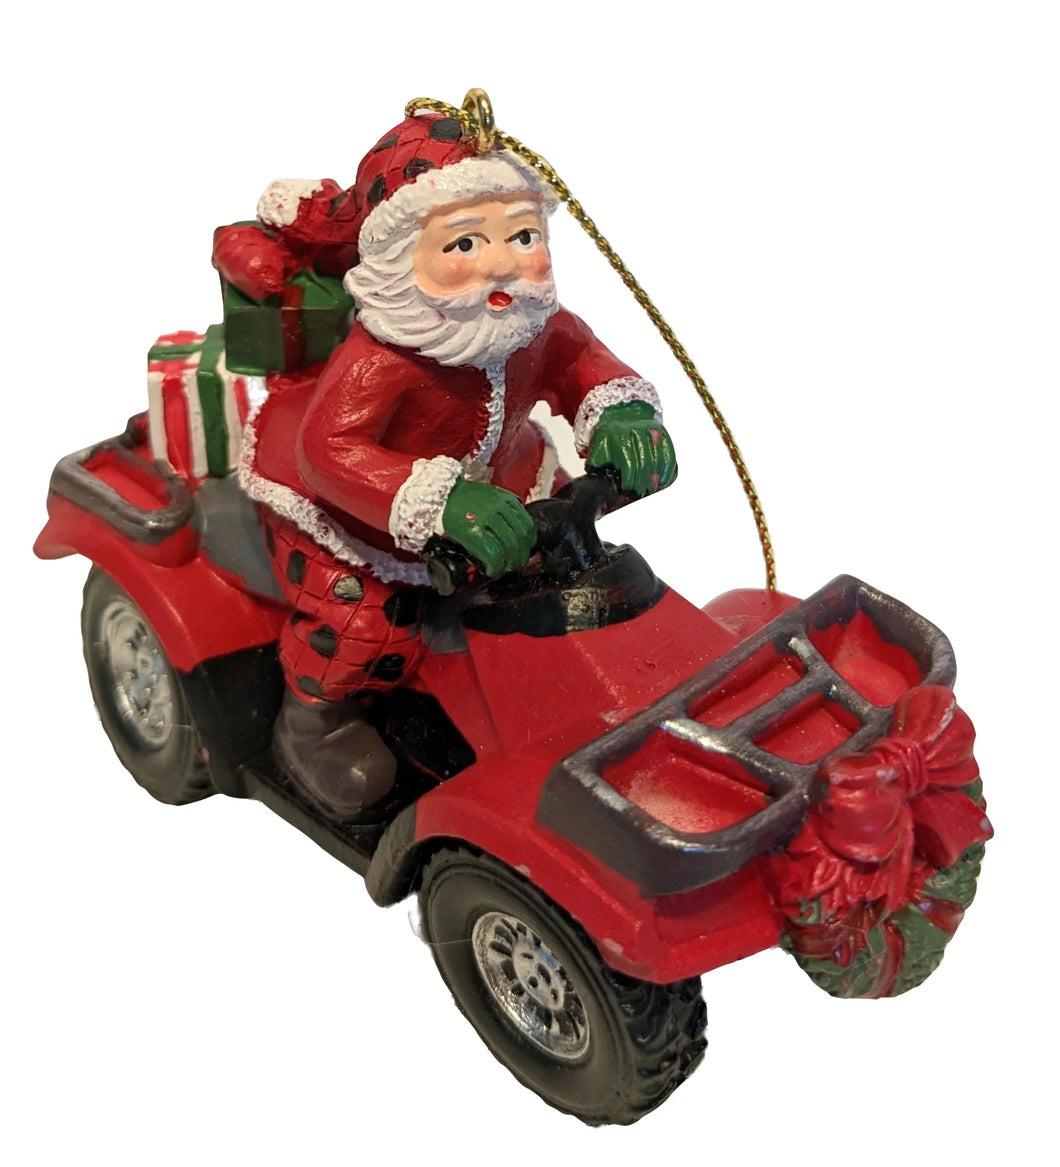 Lodge Santa Ornament Riding an ATV with Christmas Gifts & Christmas Wreath